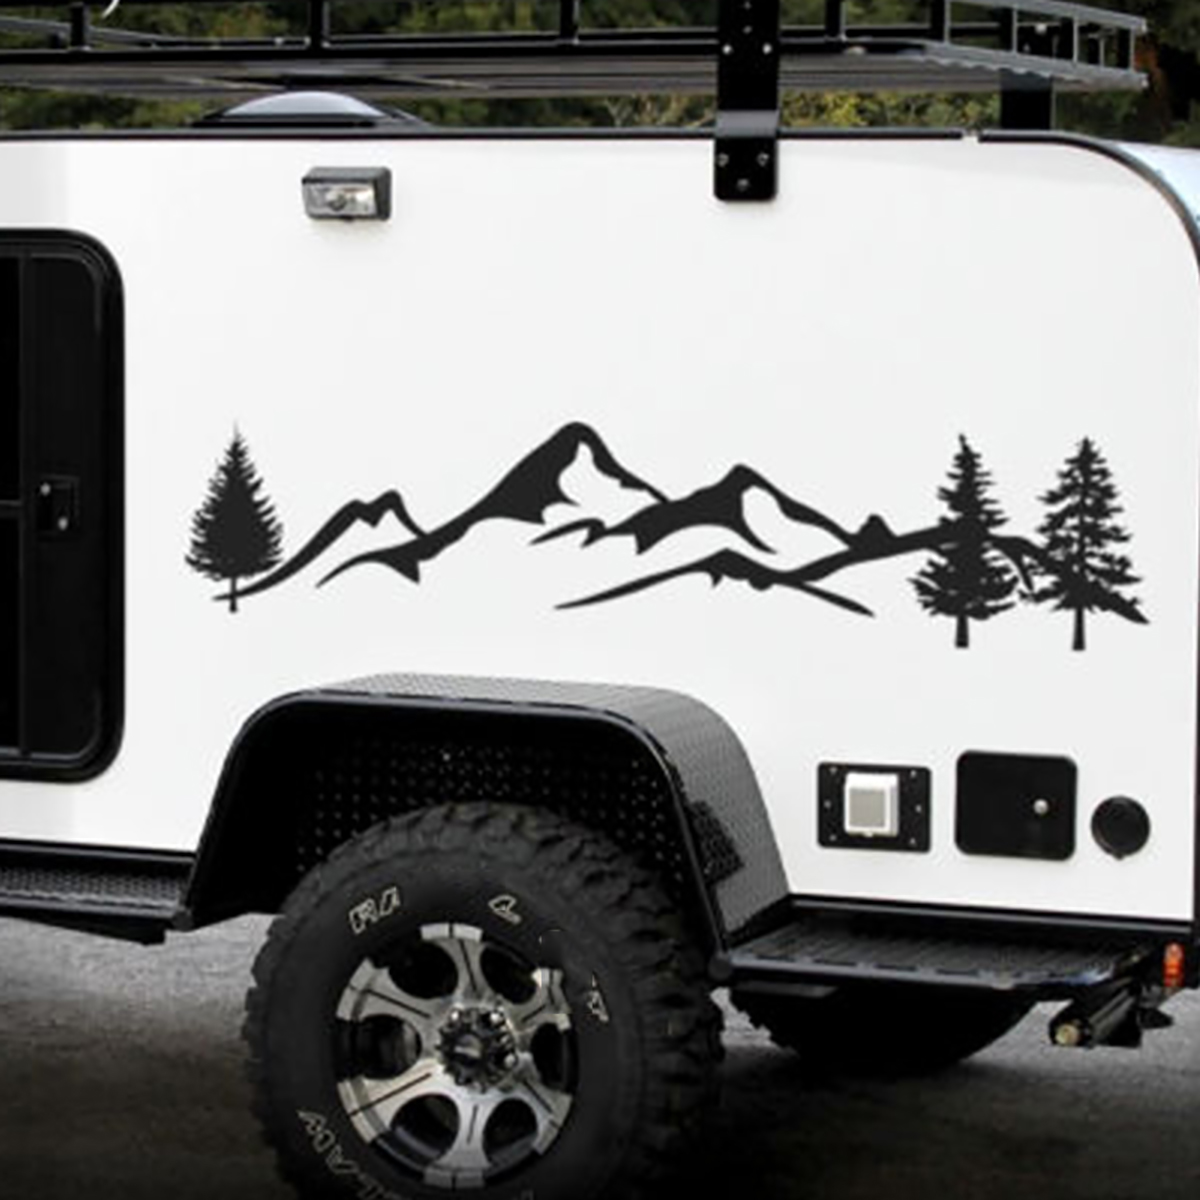 100X20Cm Car Sticker Graphics Decal Snowy Mountain Range for Camper Van Motorhome Caravan - Auto GoShop